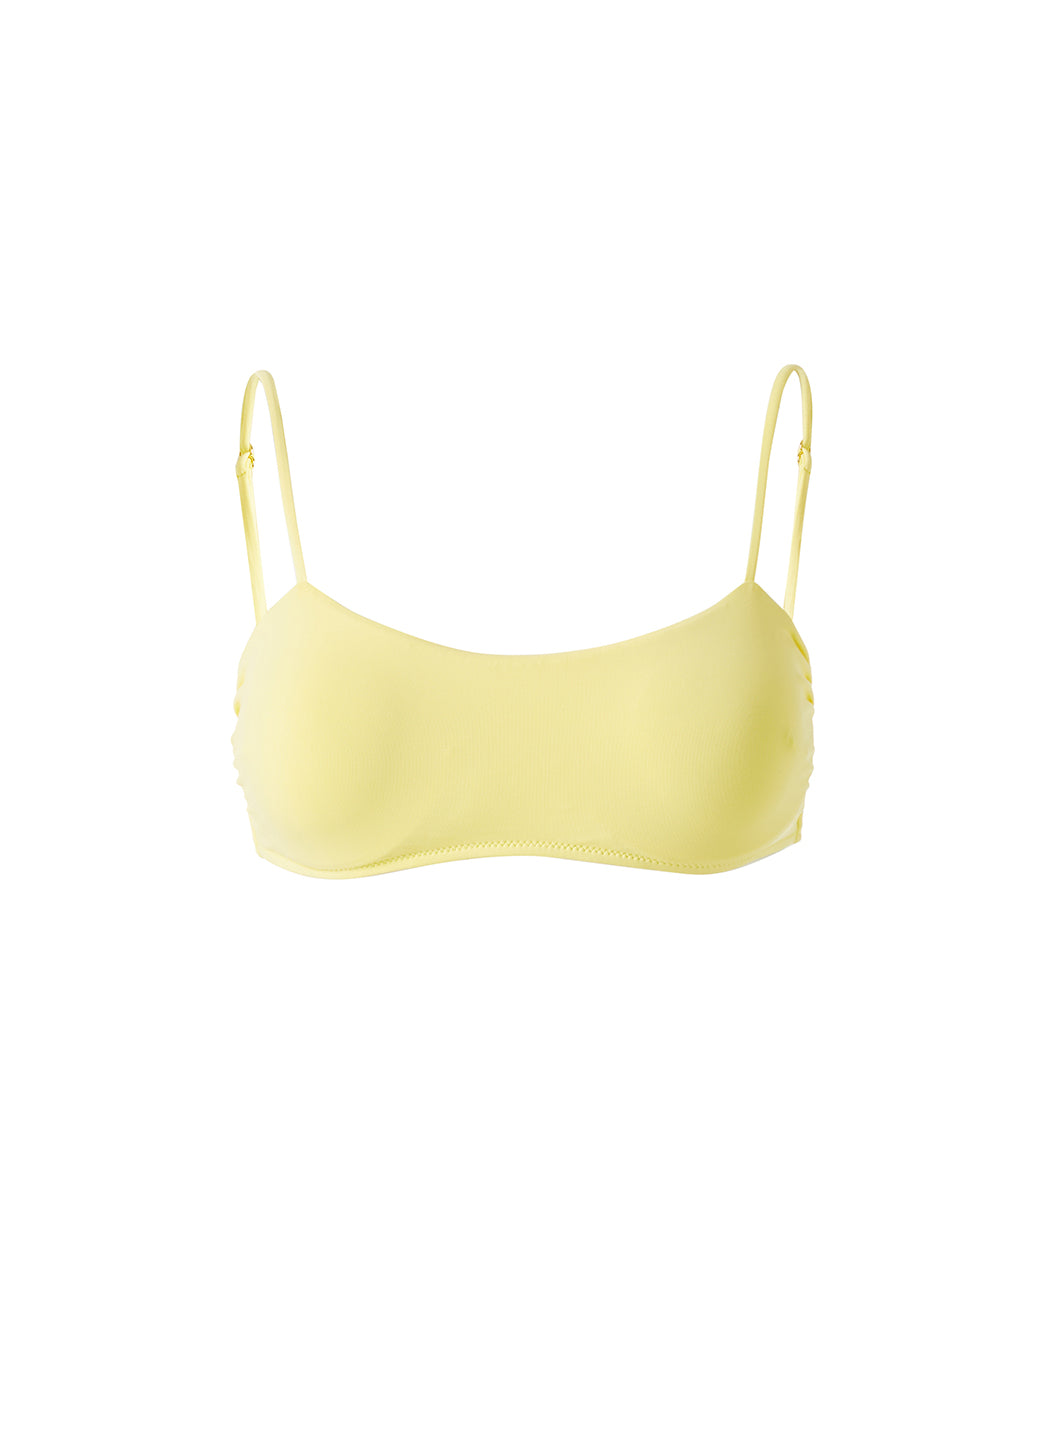 Vegas Yellow Bikini Top Cutout